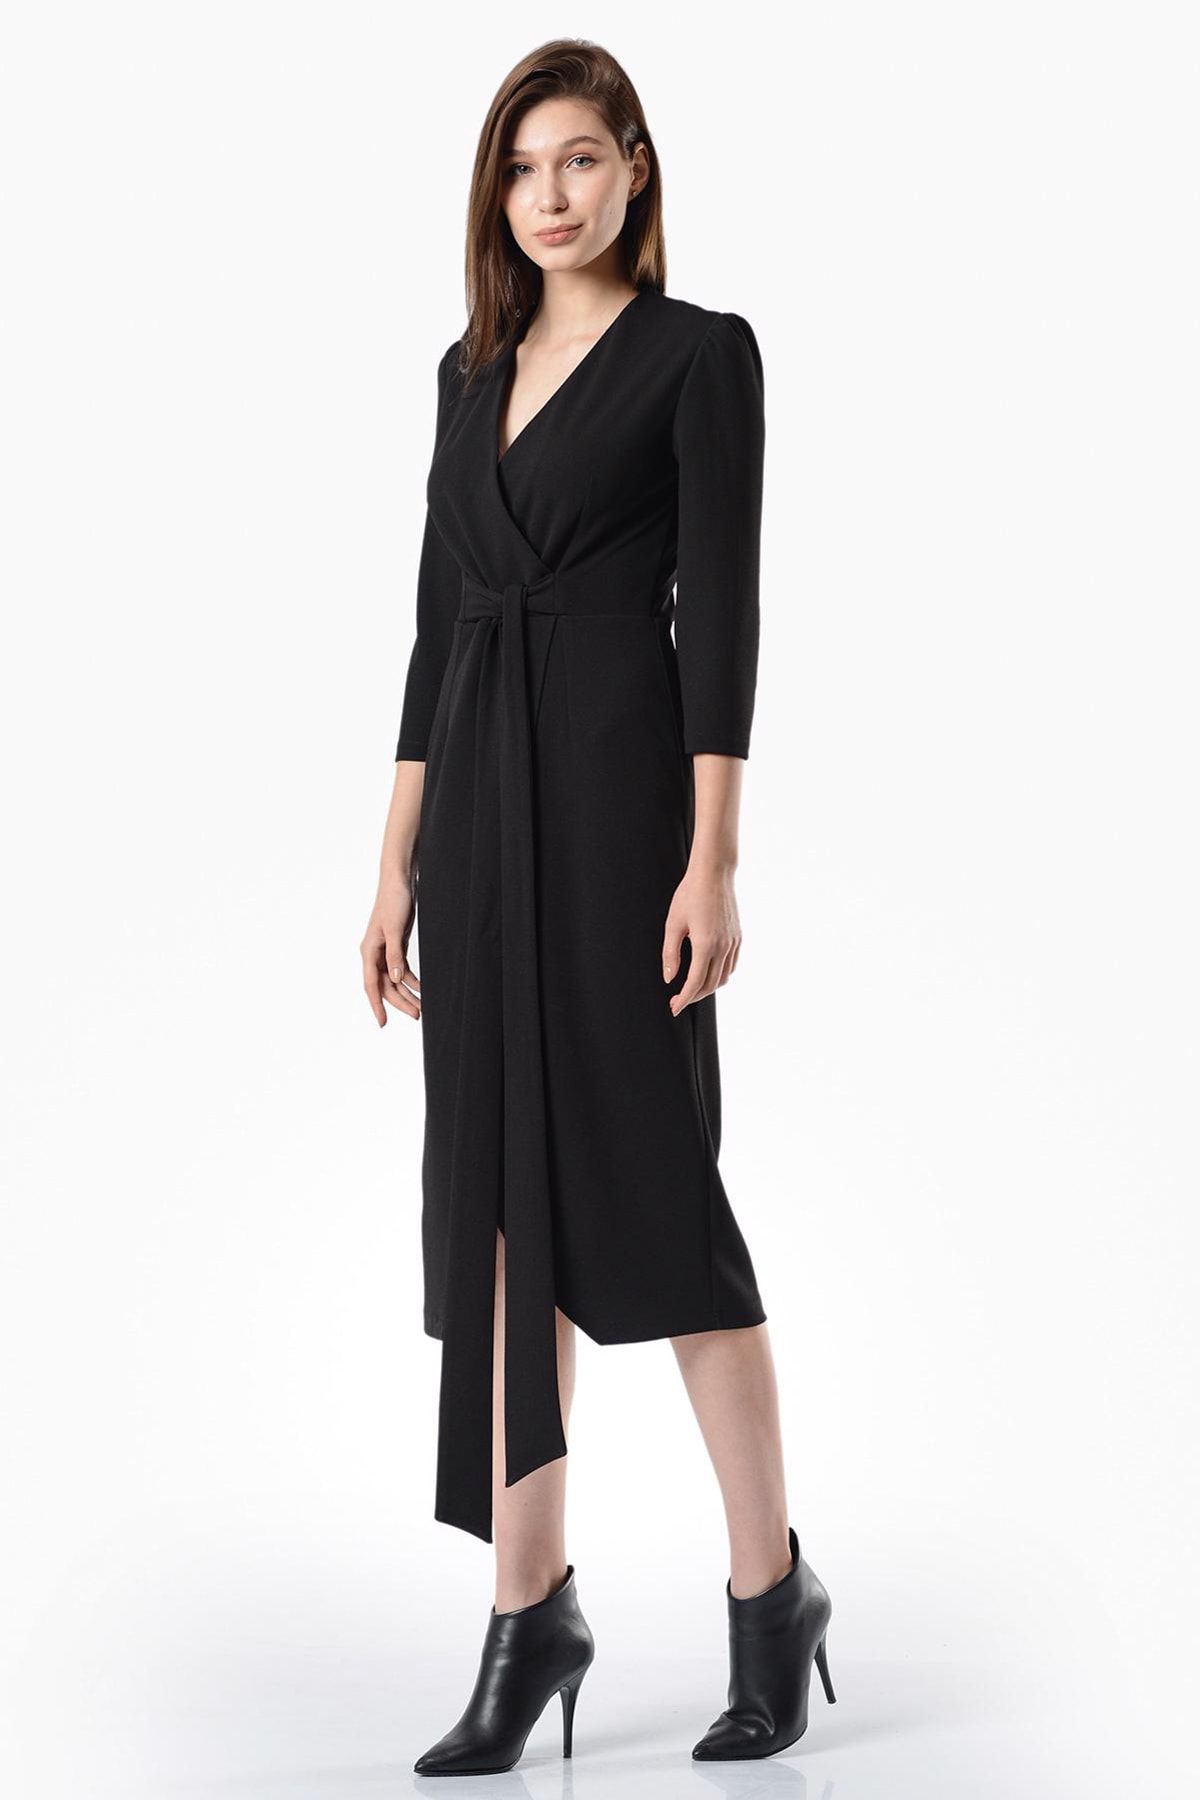 İroni Kadın Siyah Kruvaze Yırtmaçlı  Elbise 5322-1202